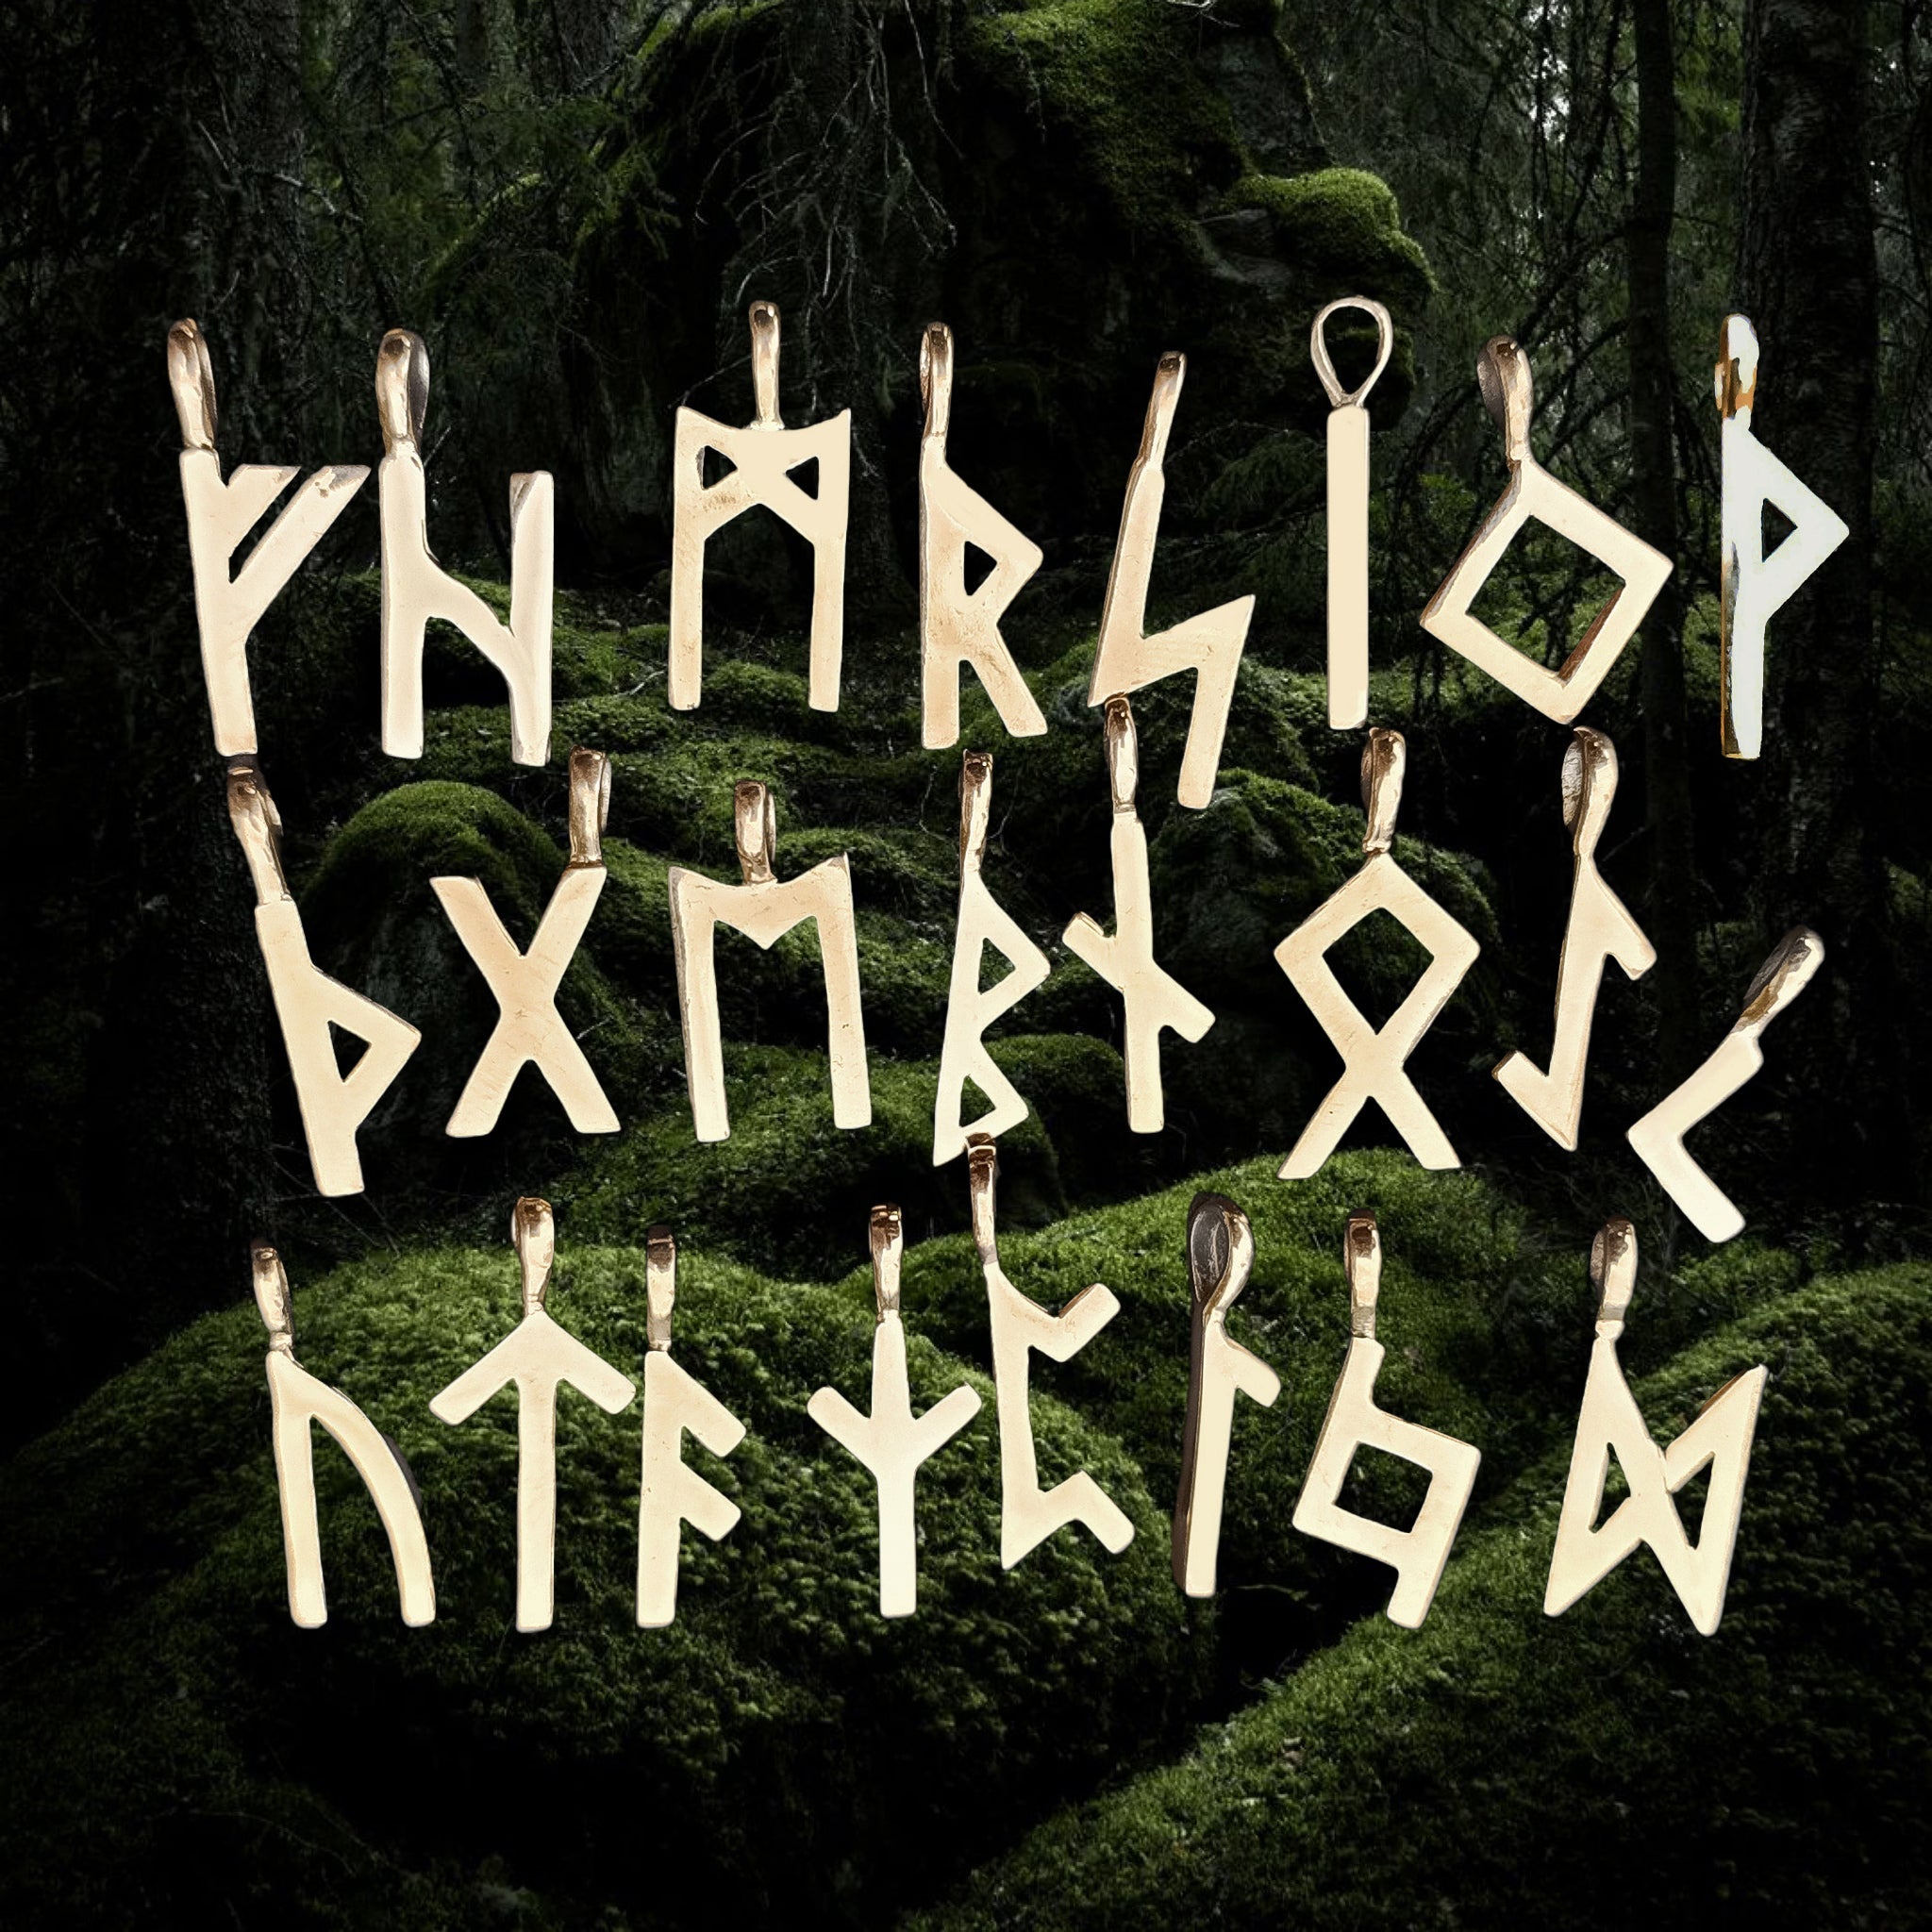 Bronze Elder Futhark Rune Pendants on Mossy Wood Background